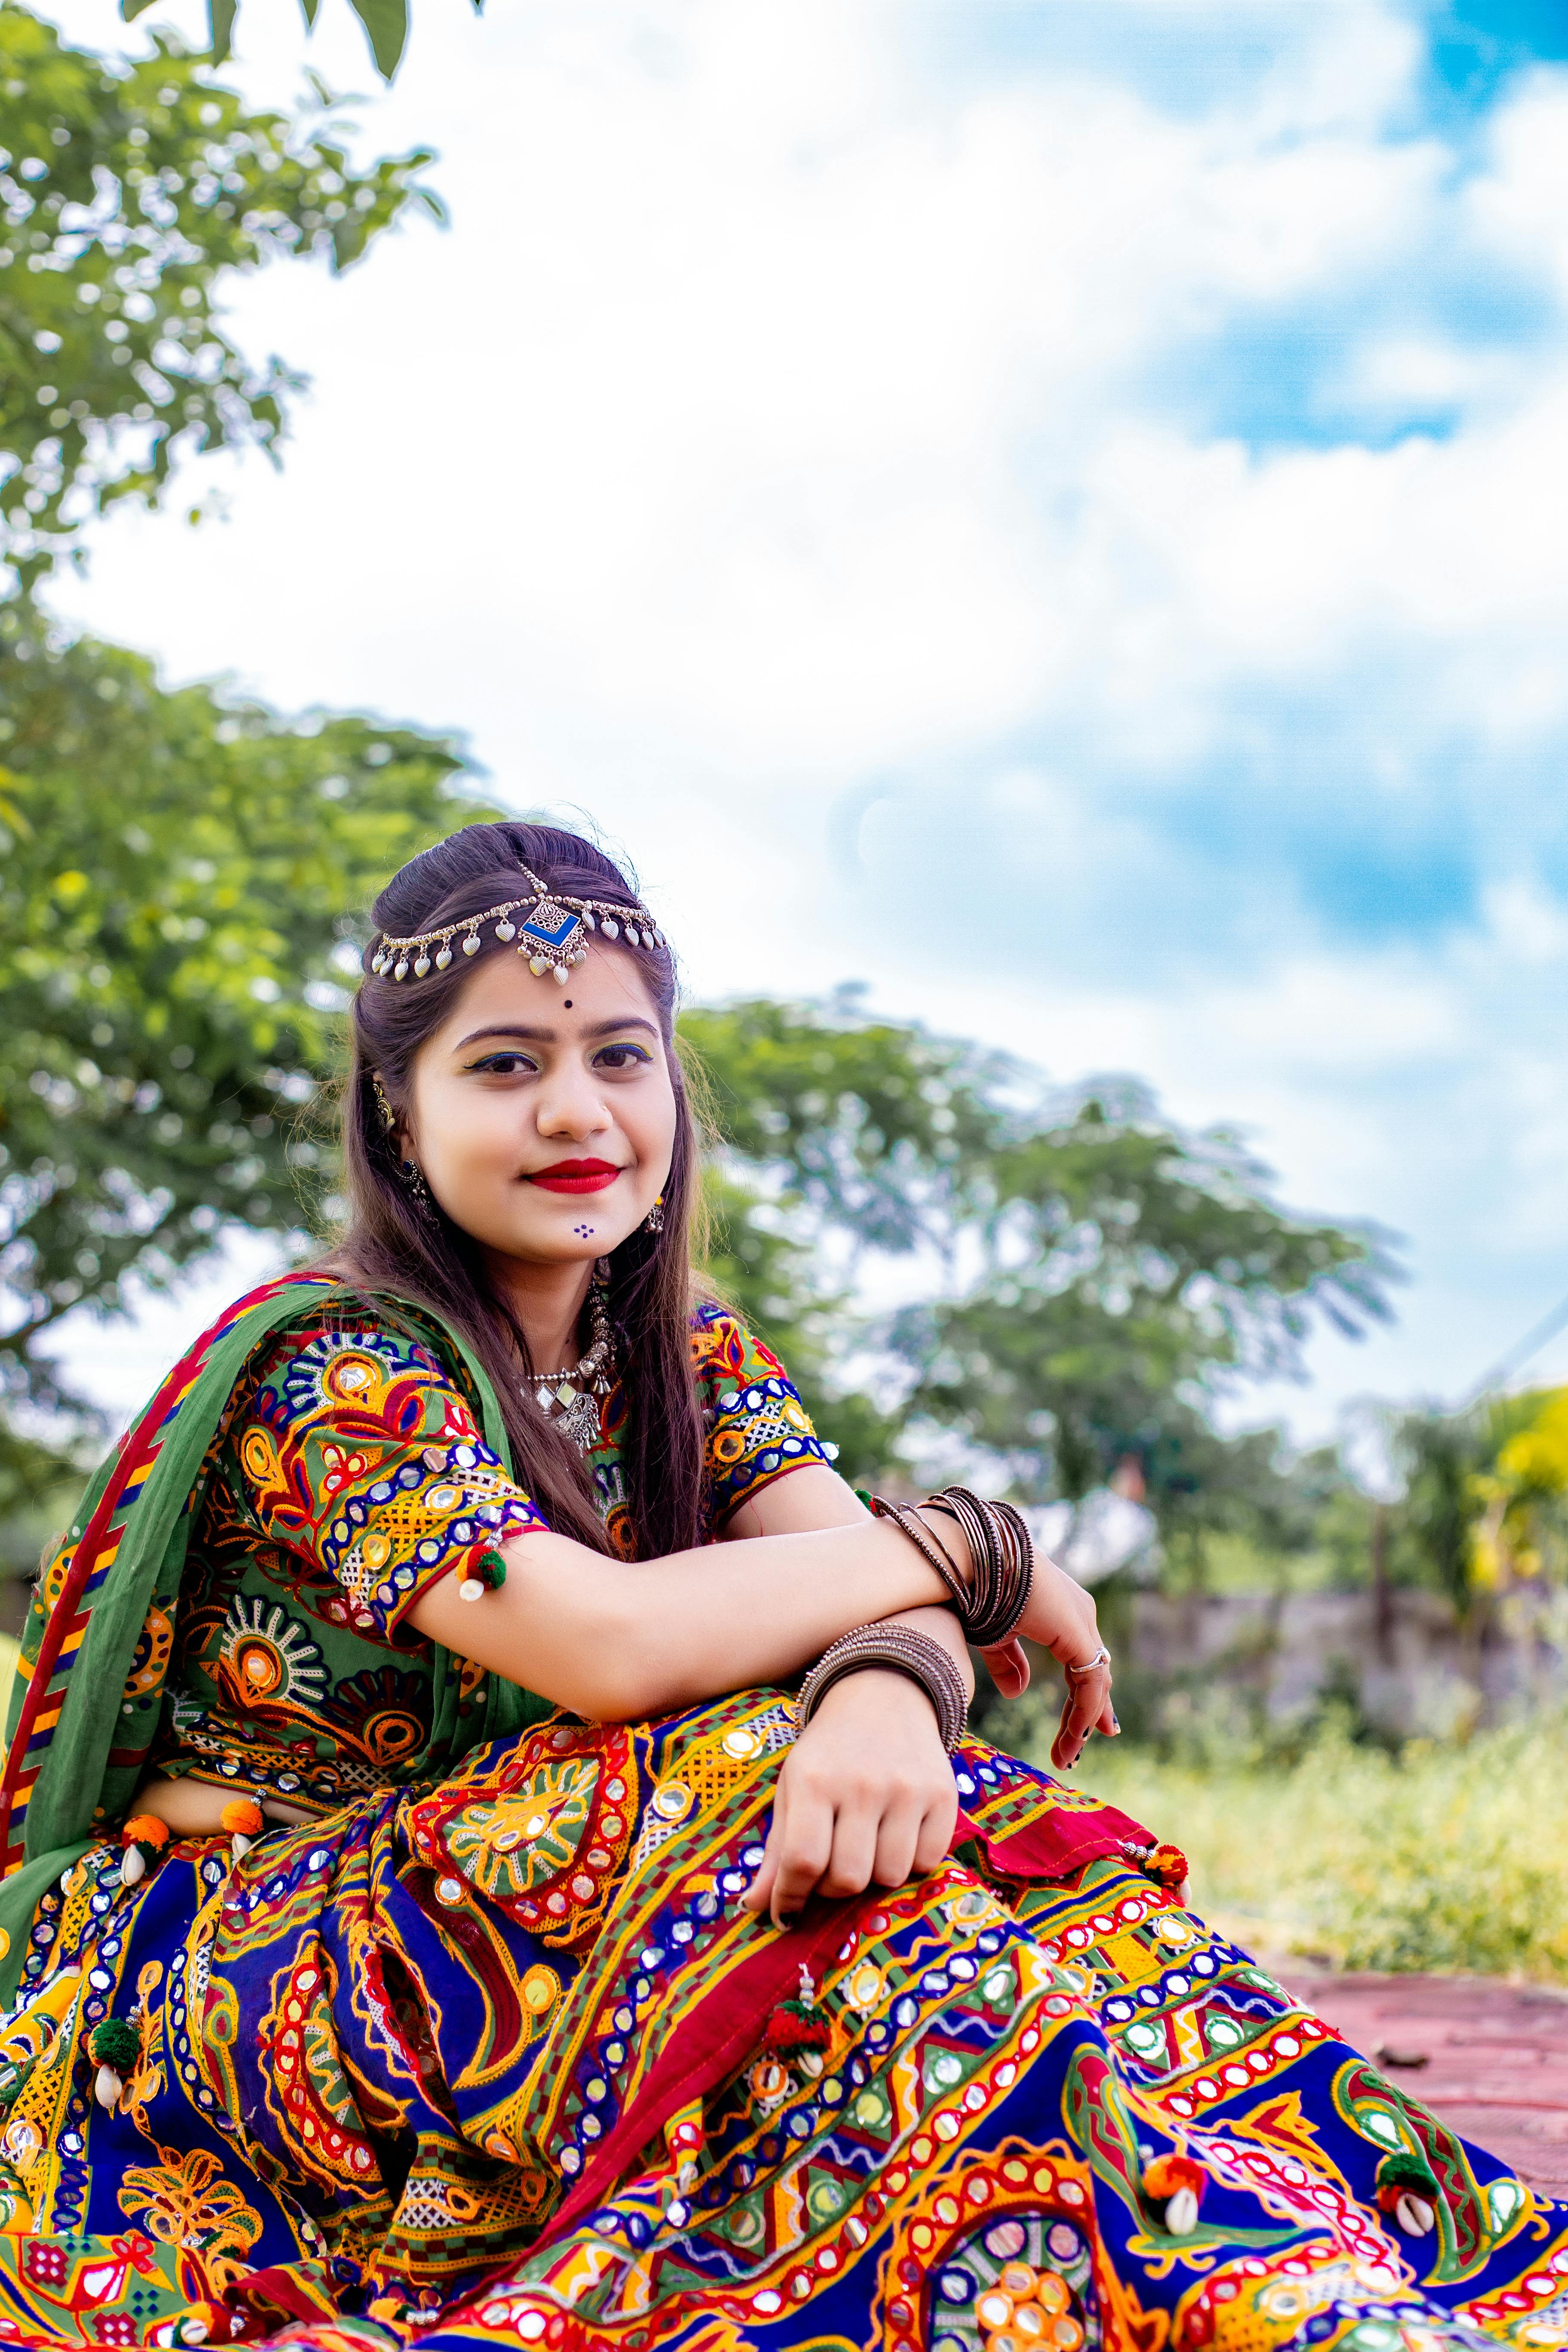 243 Gujarati Dress Stock Photos - Free & Royalty-Free Stock Photos from  Dreamstime